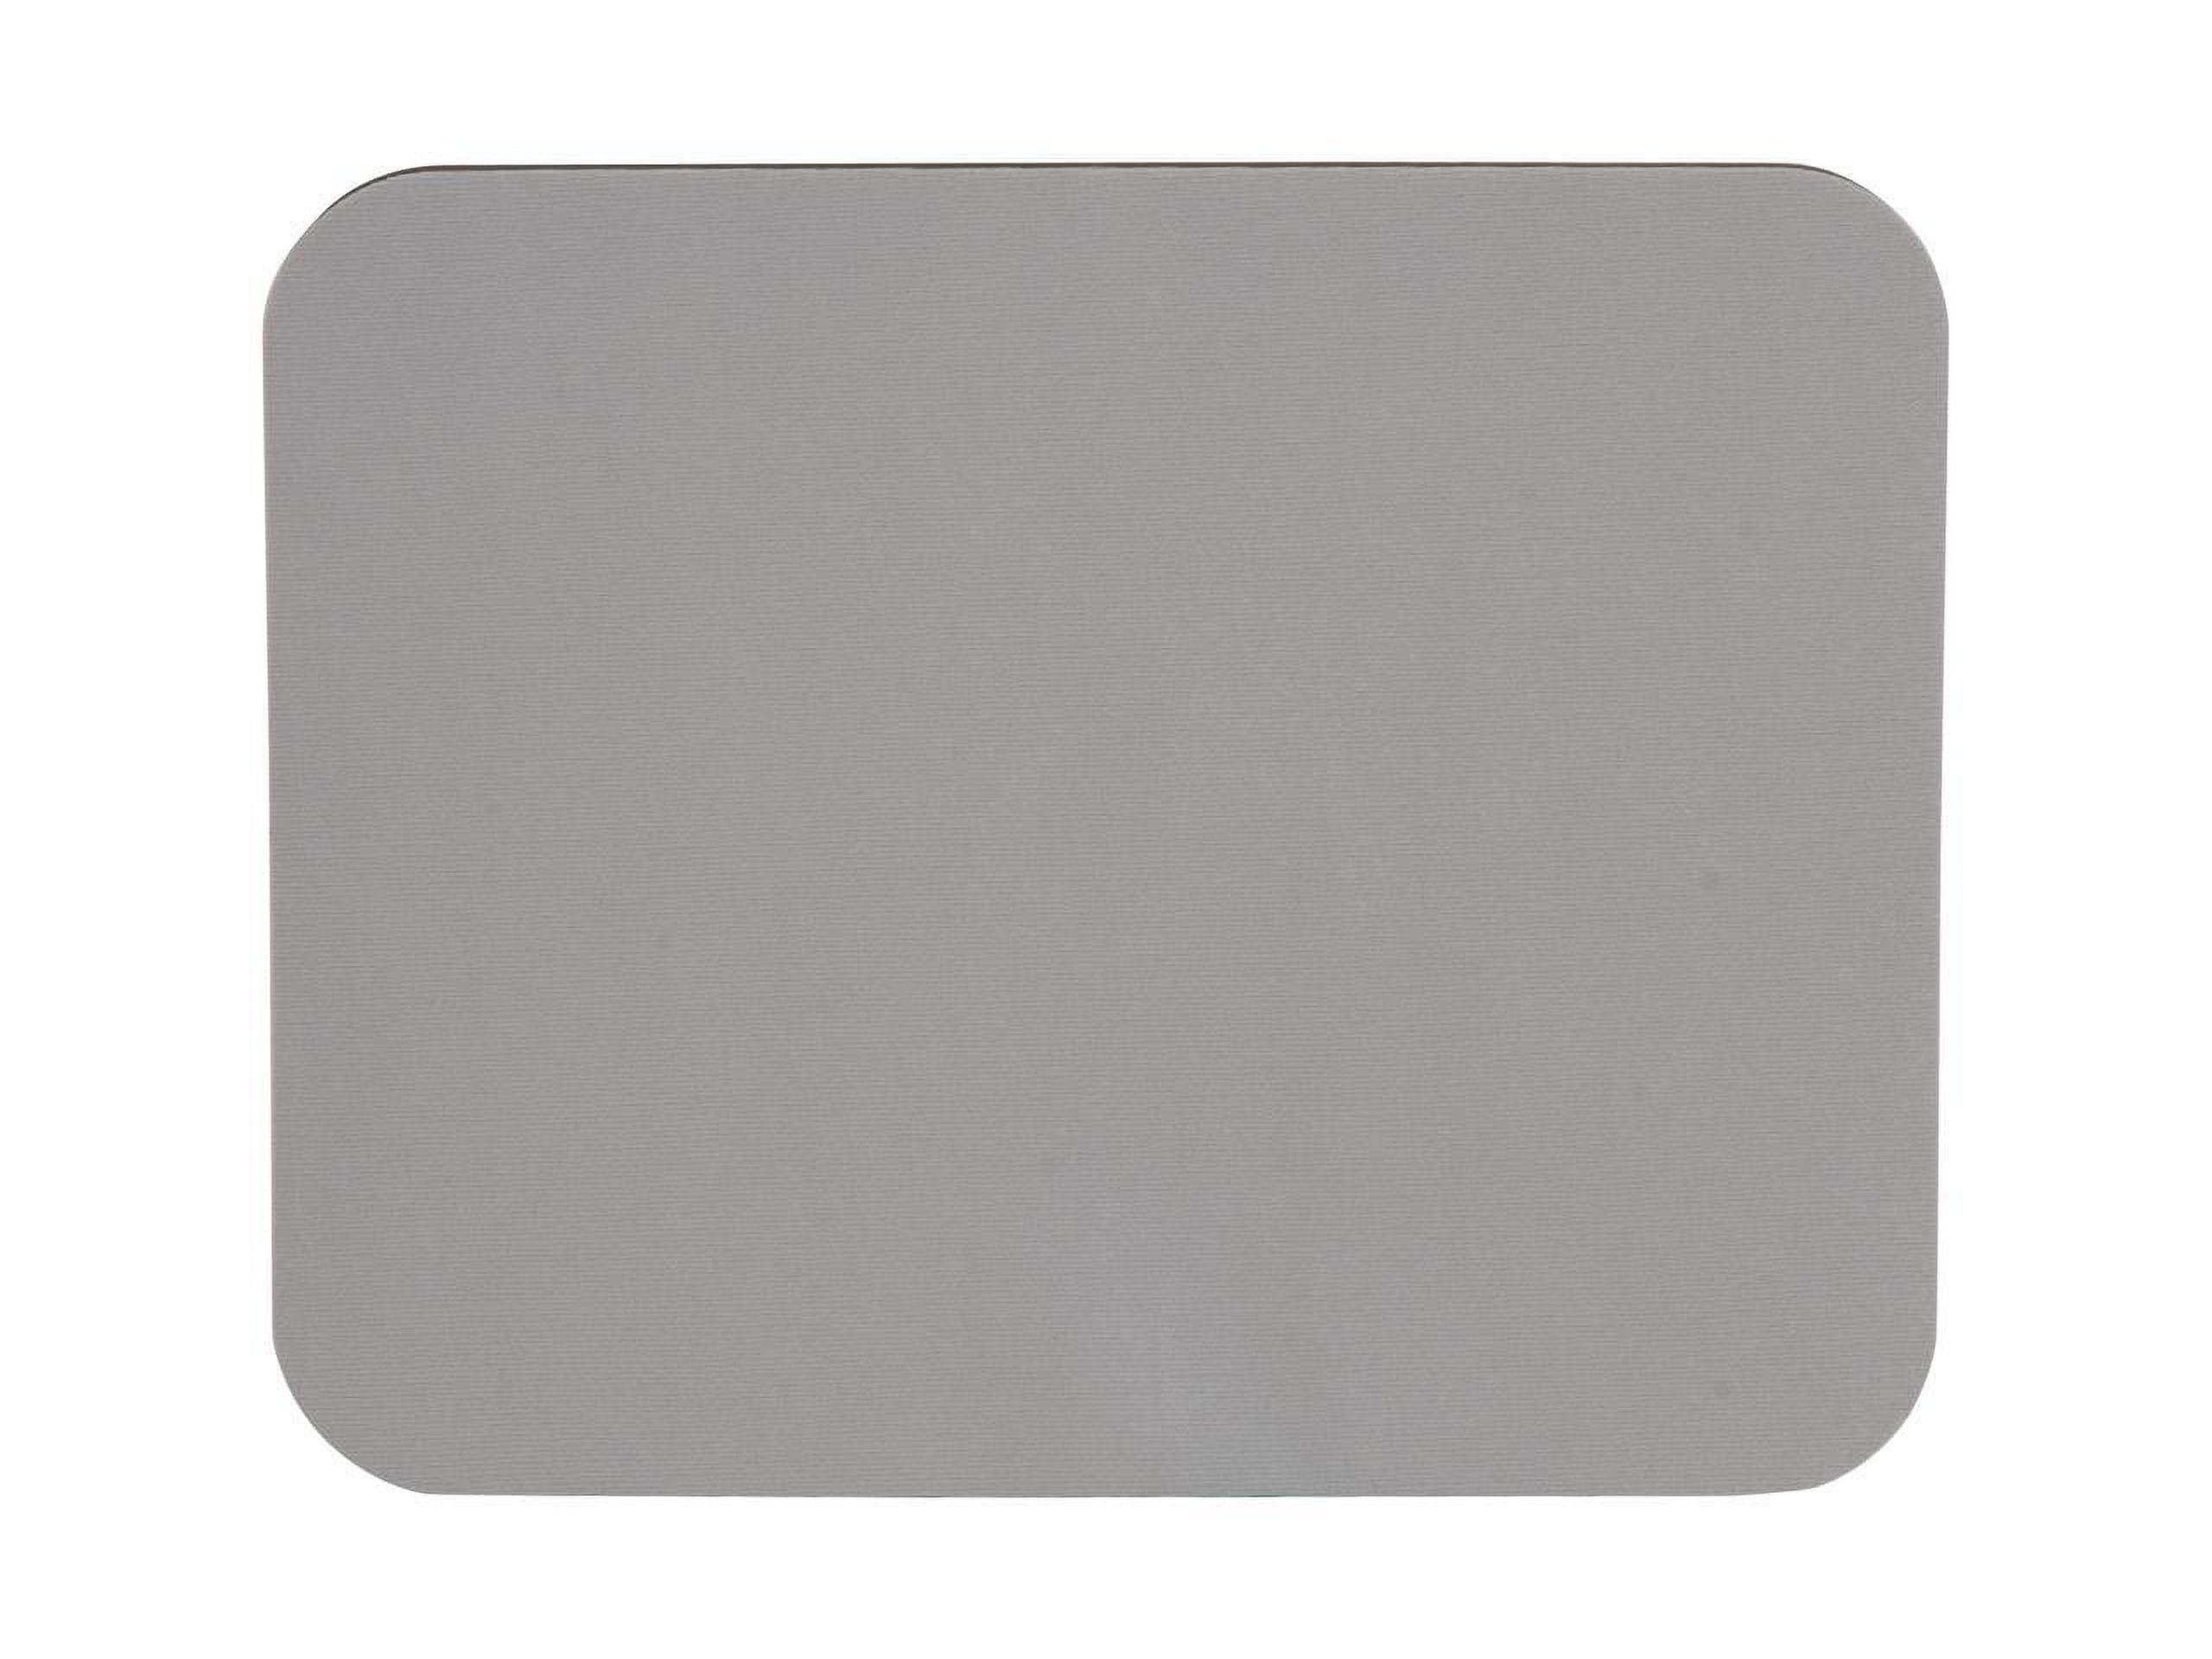 Belkin Standard Mouse Pad - image 2 of 3